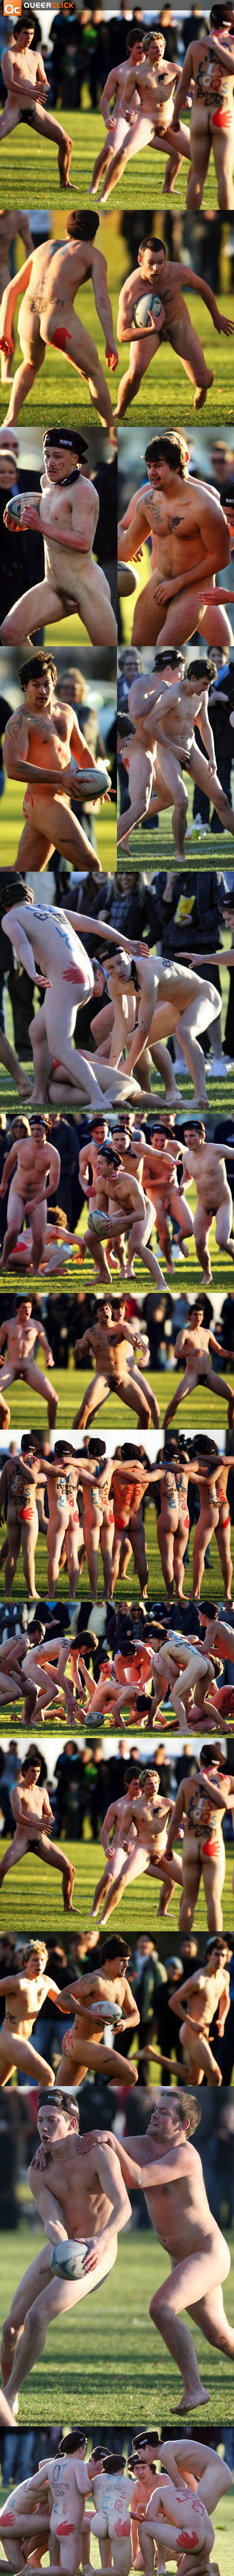 naked-rugbyfrance.jpg